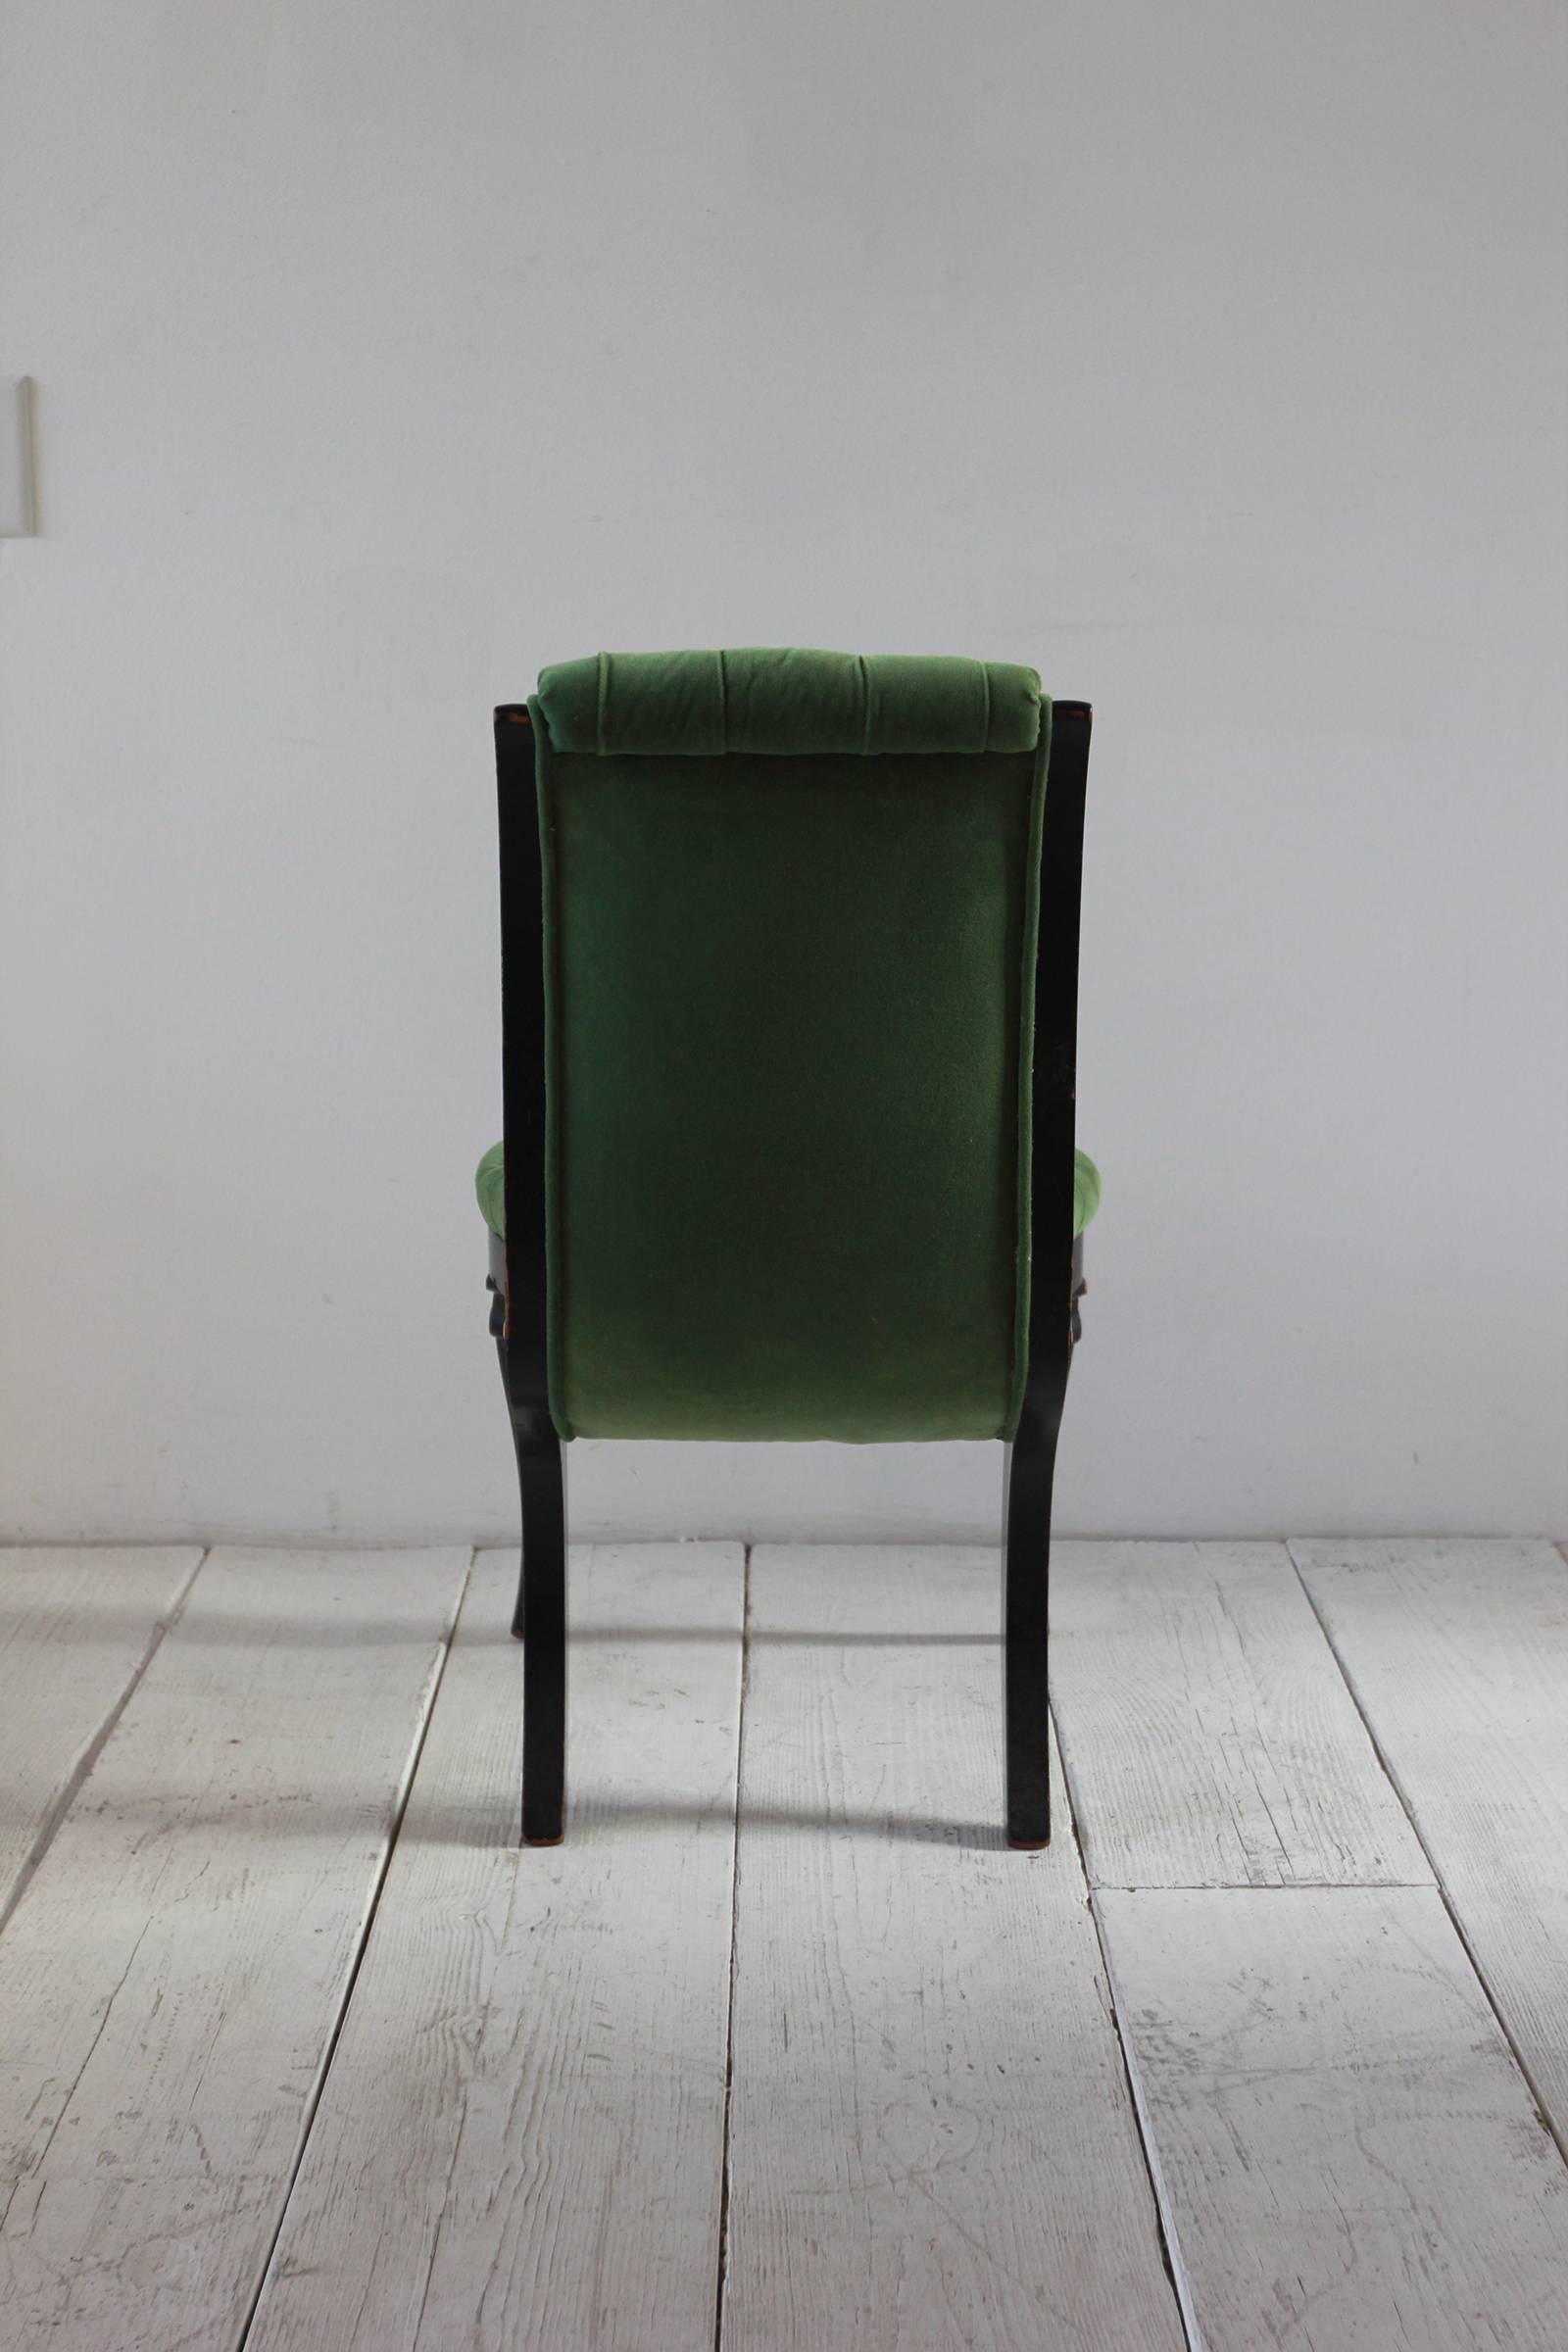 20th Century Black and Gold Painted Regency Chair Upholstered in Green Velvet